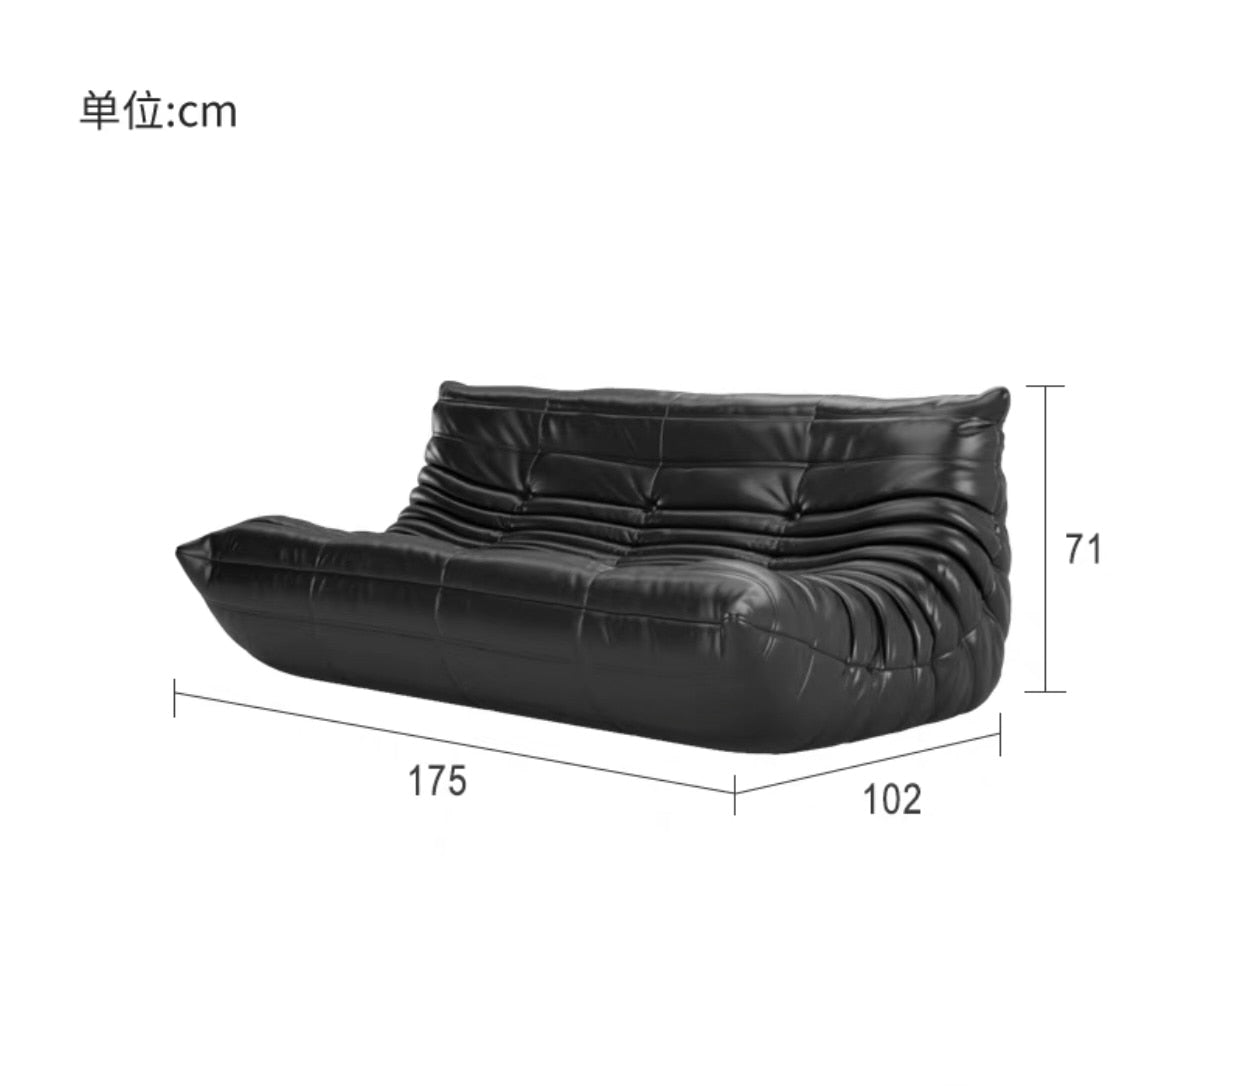 Comfy Modern Sofa